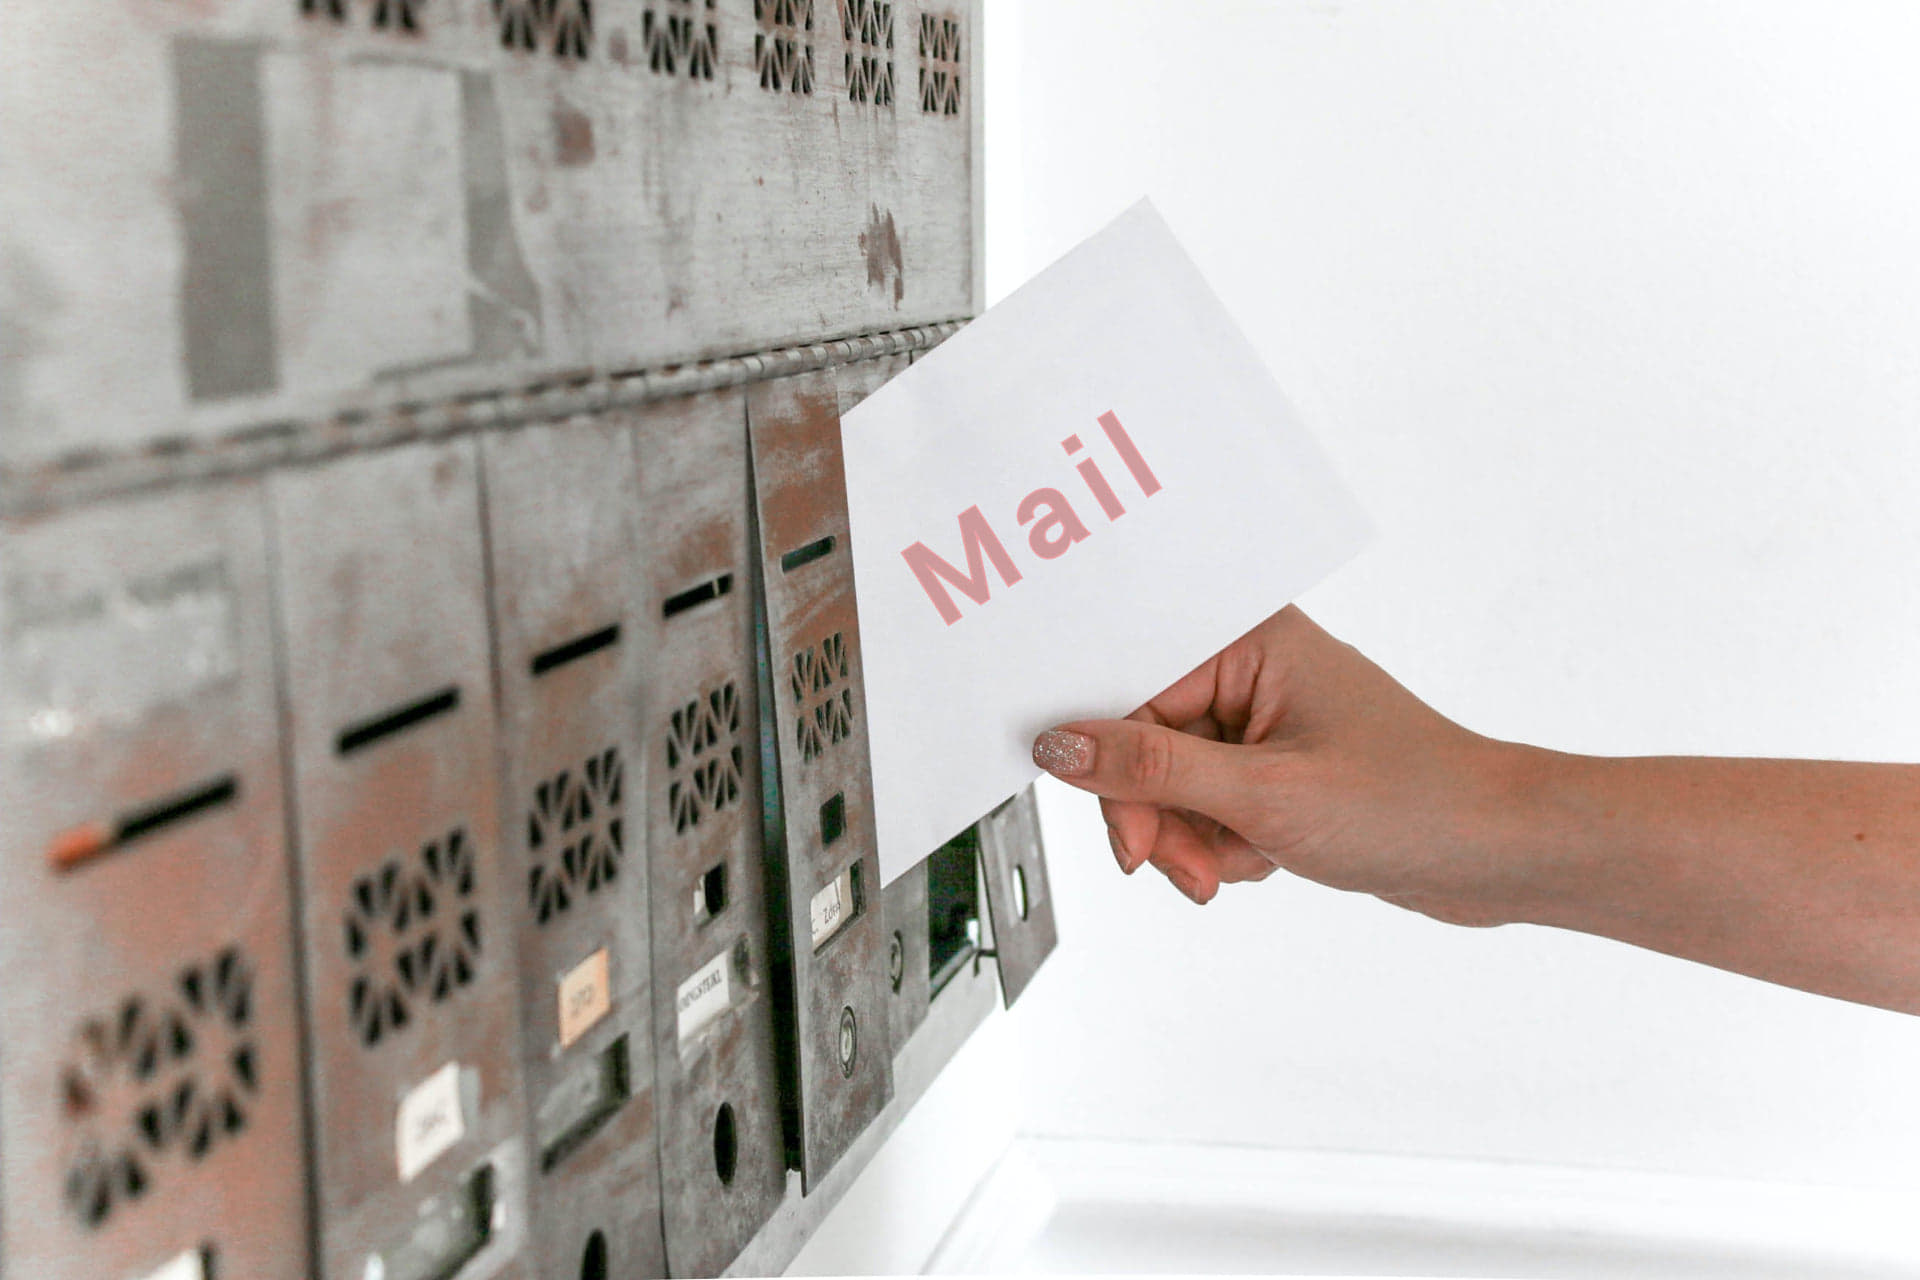 Mail service